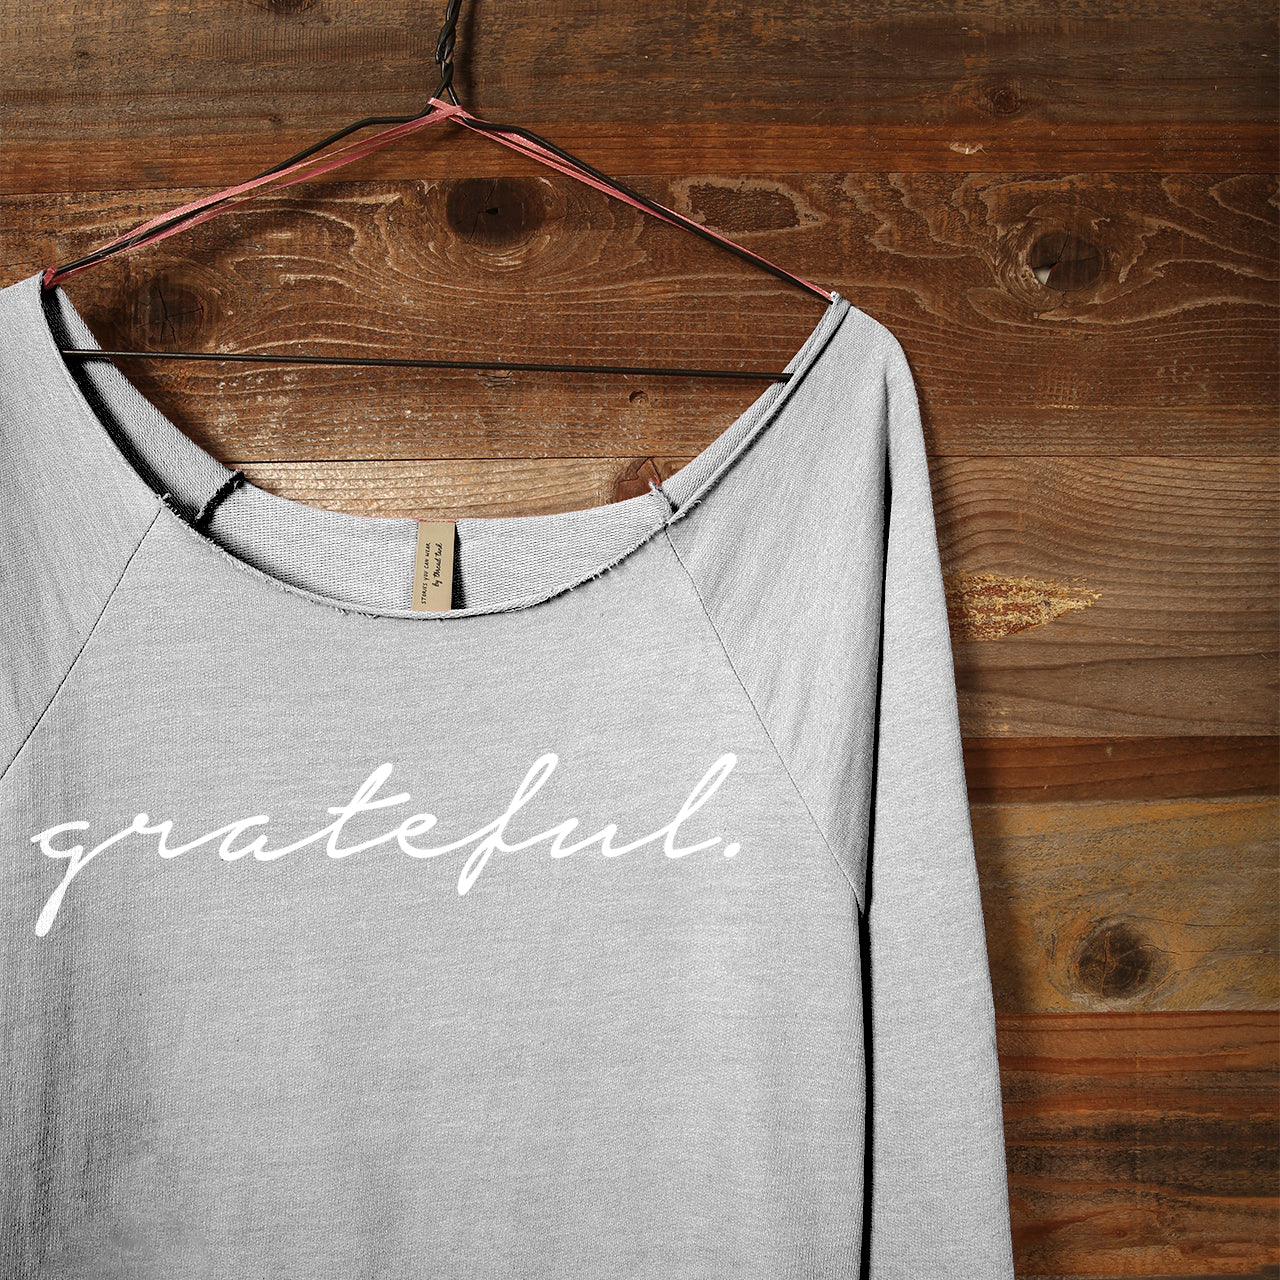 Grateful Women's Graphic Printed Lightweight Slouchy 3/4 Sleeves Sweatshirt Sport Grey